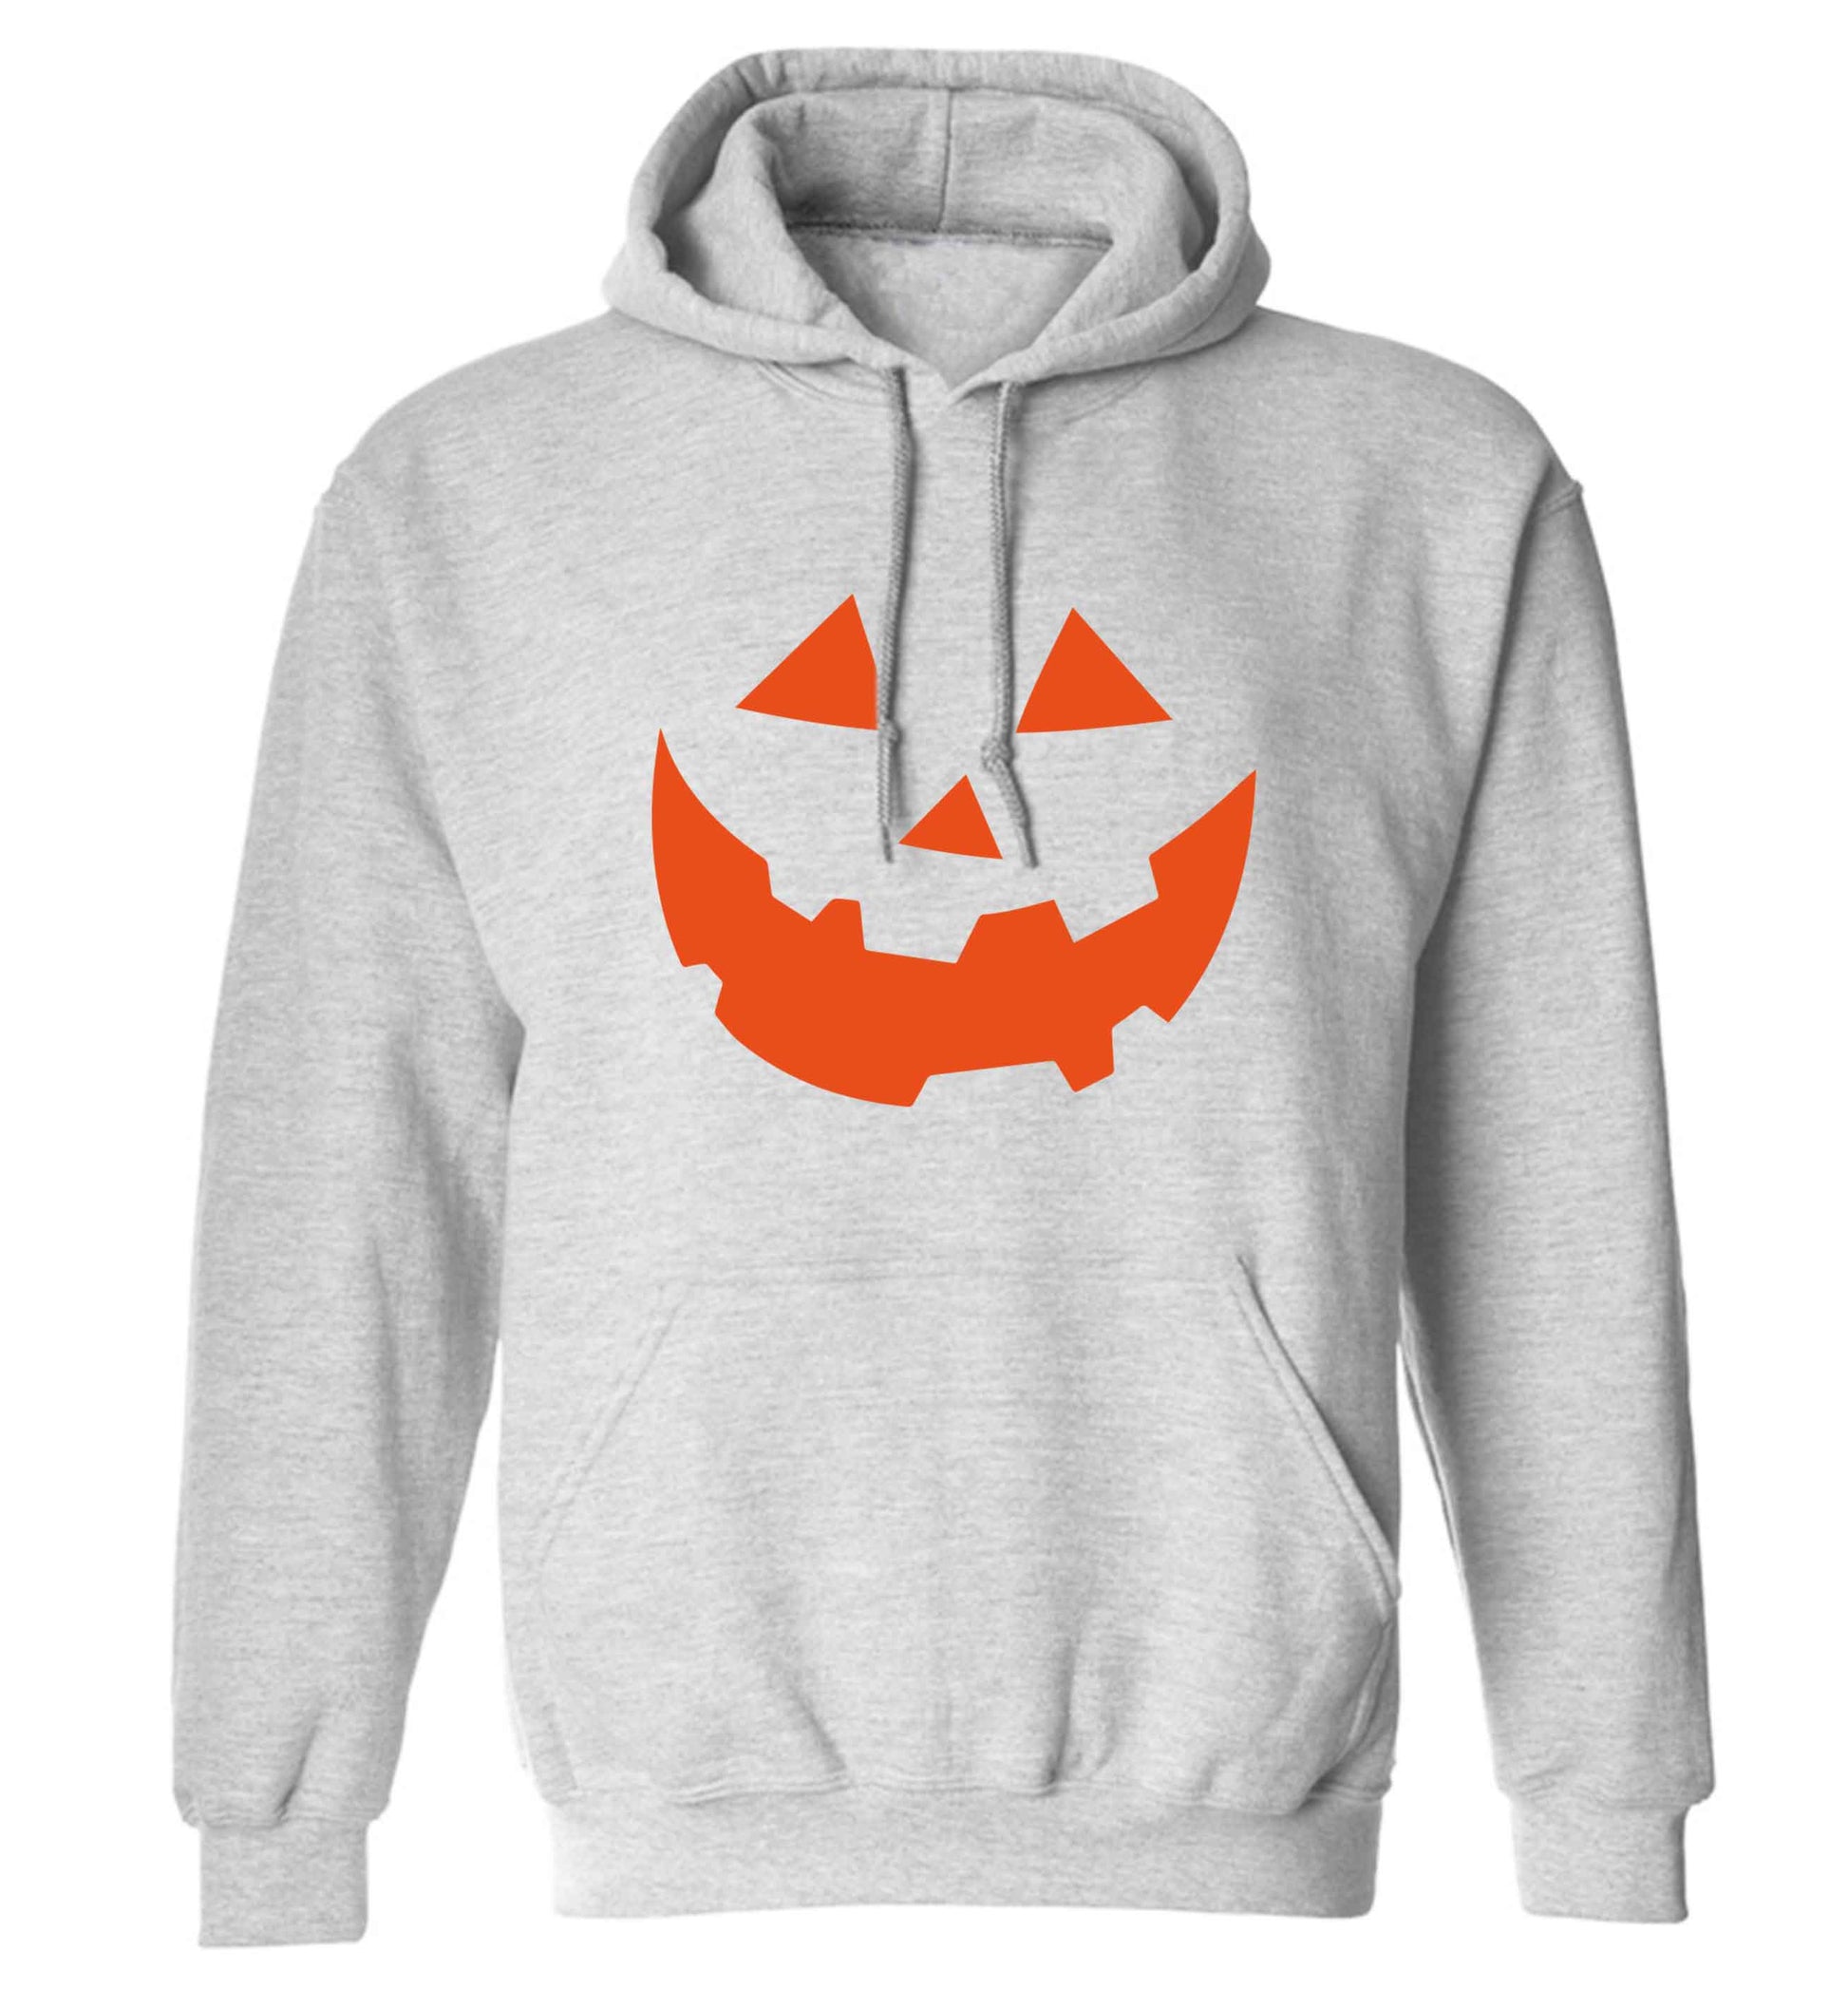 Pumpkin Spice Nice adults unisex grey hoodie 2XL